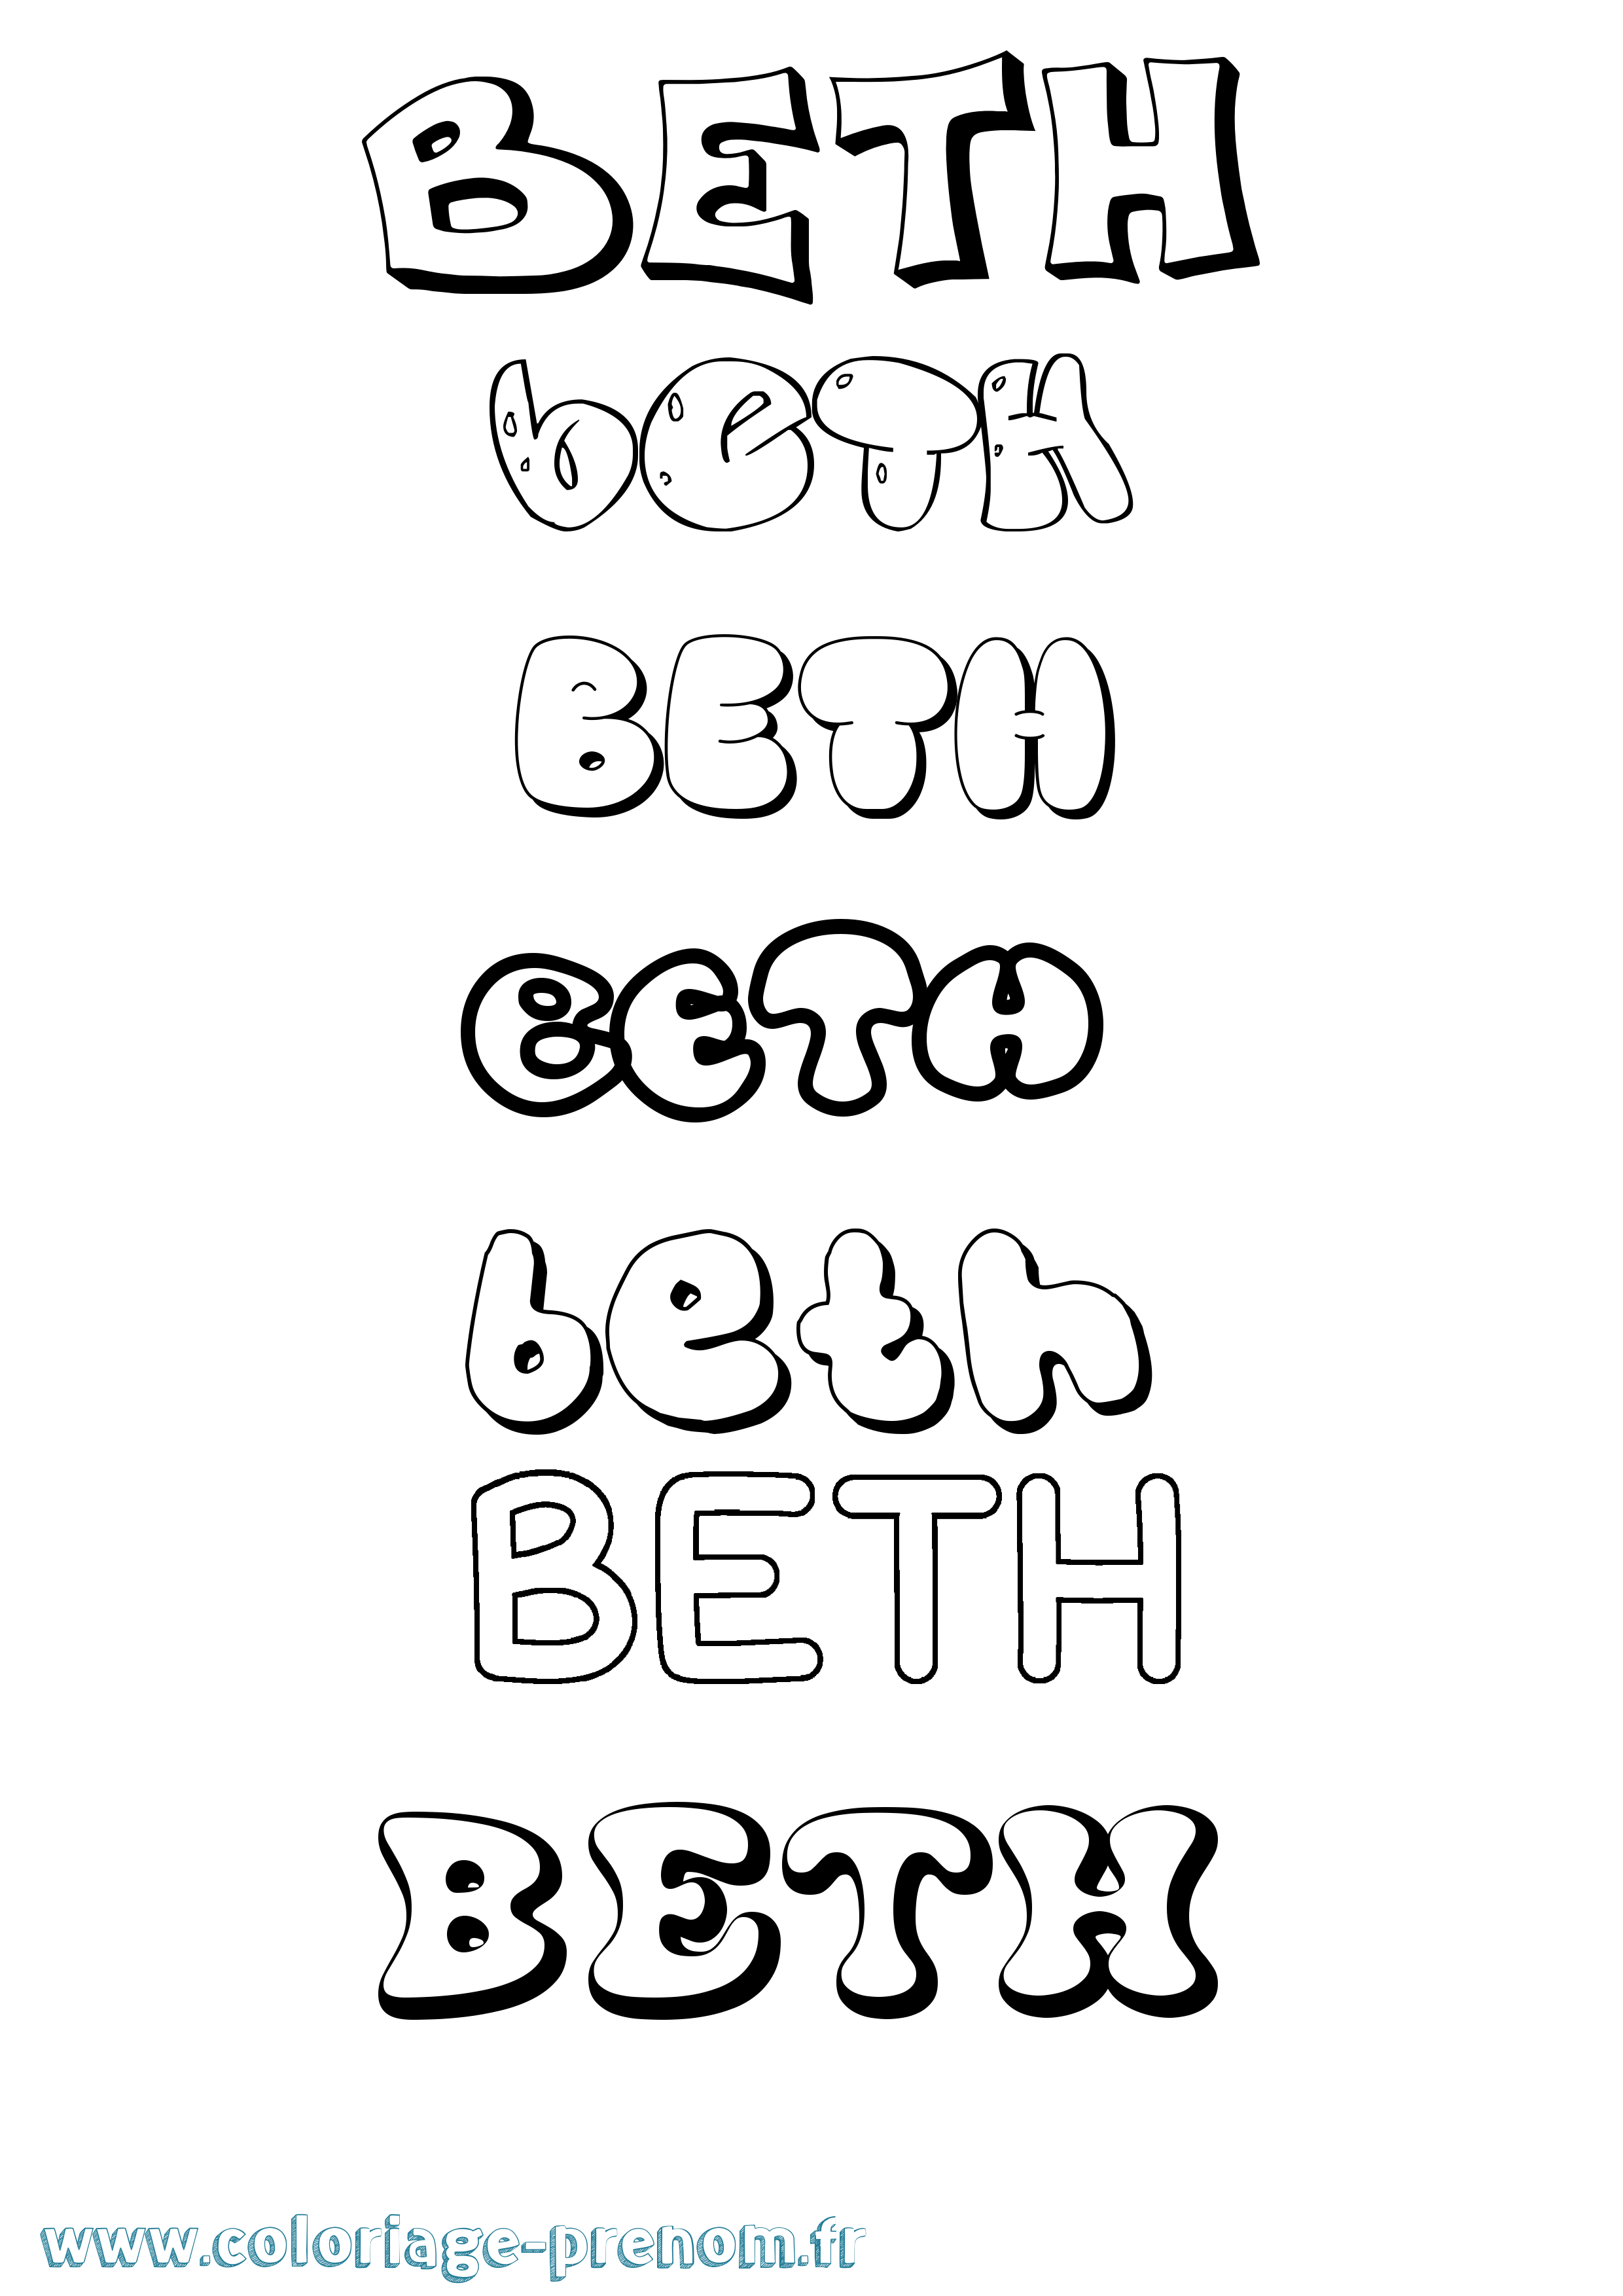 Coloriage prénom Beth Bubble